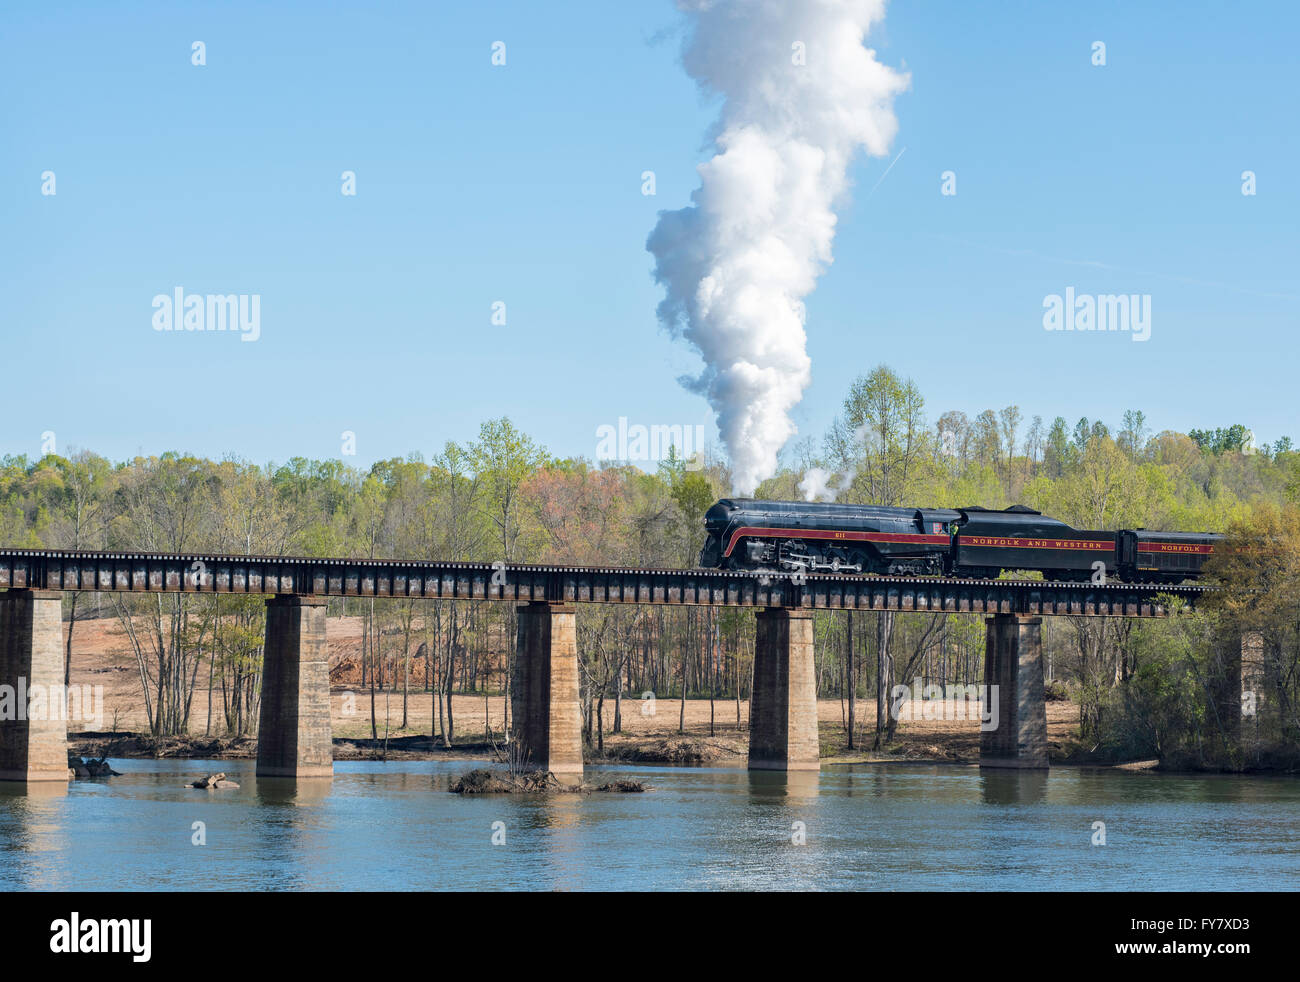 Norfolk & Western 611 Crossing The Catawba River Train Bridge #1 Early Morning In Color - Catawba, North Carolina Stock Photo